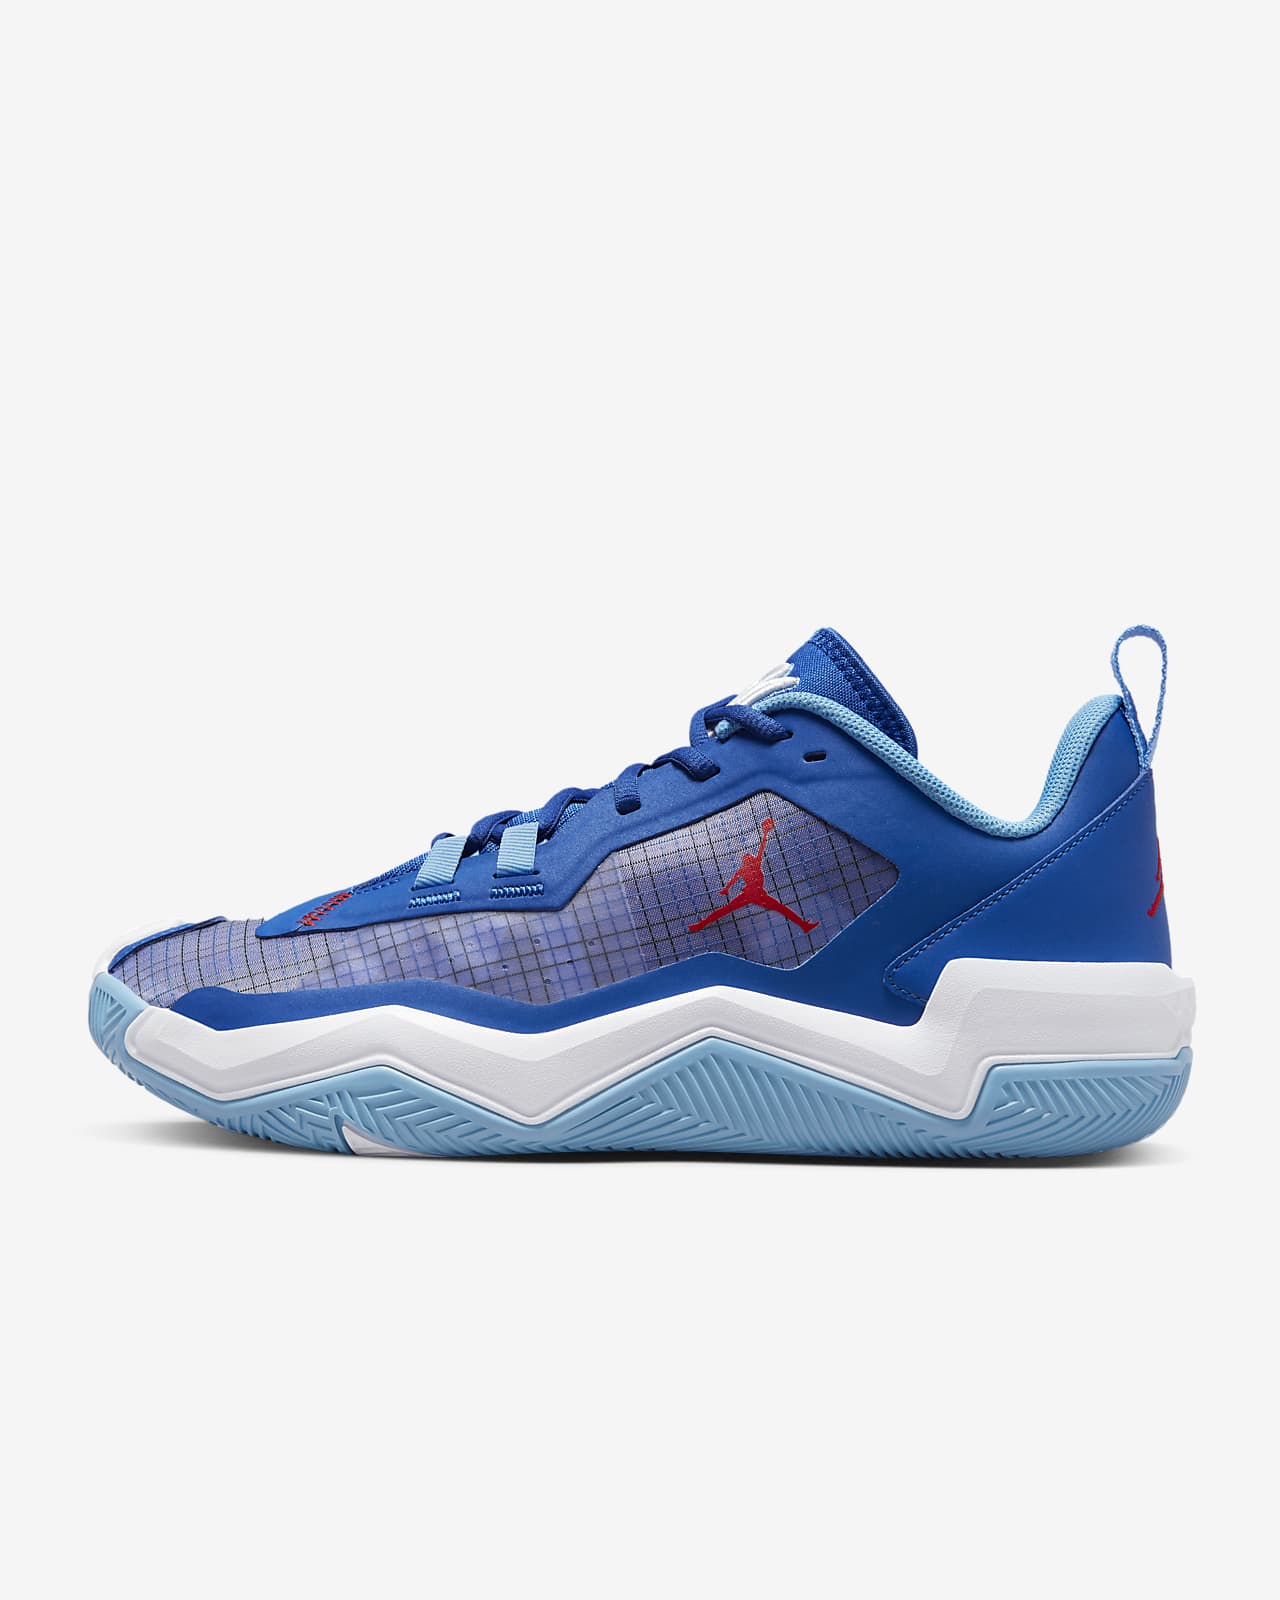 Jordan 4 Basketball Shoes. Nike